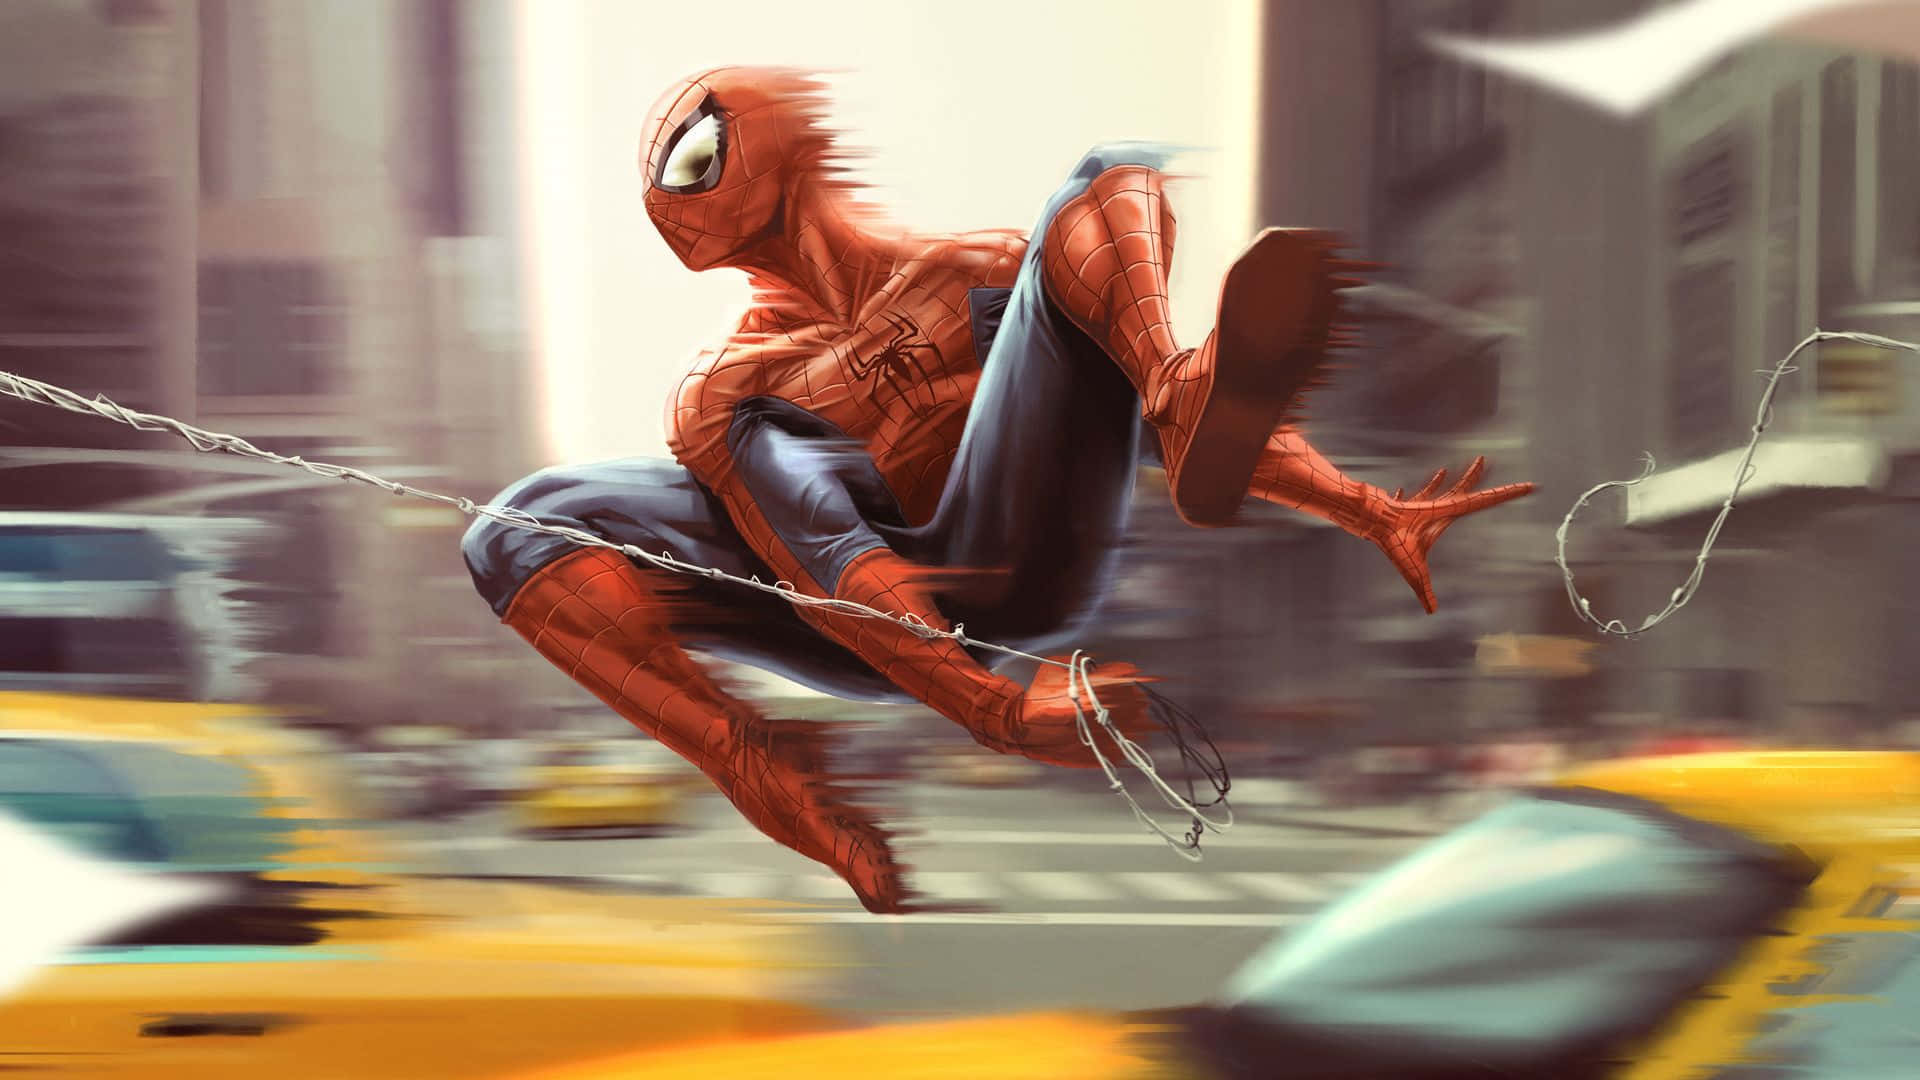 Spider-Man Swinging through the City Wallpaper